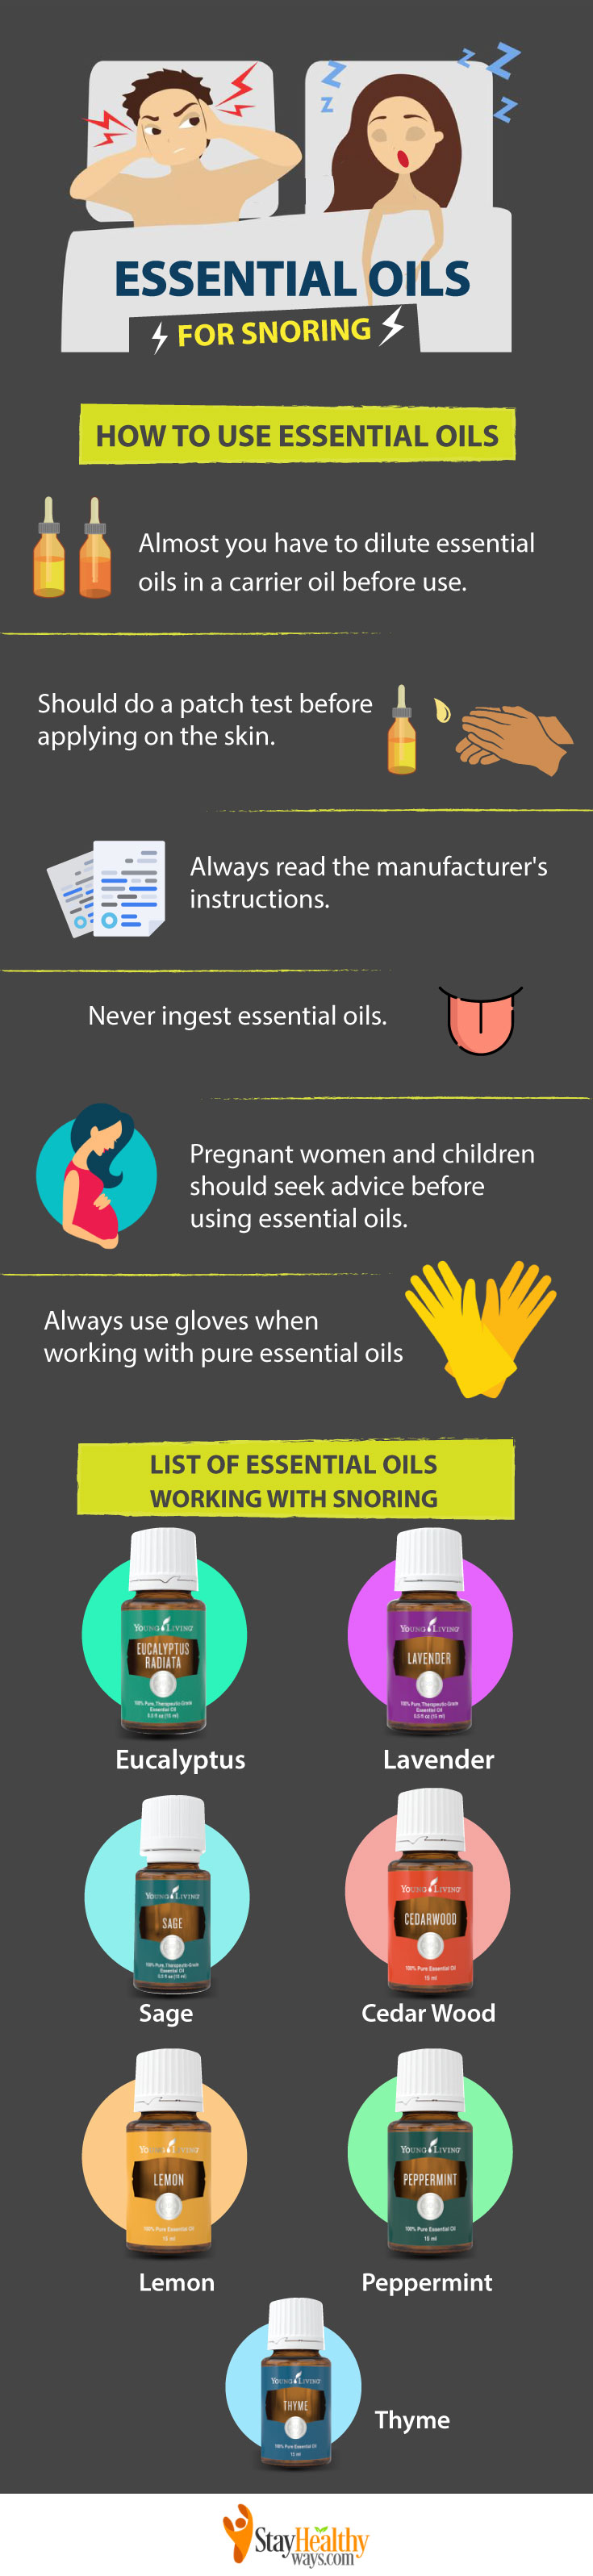 essential oils for snoring